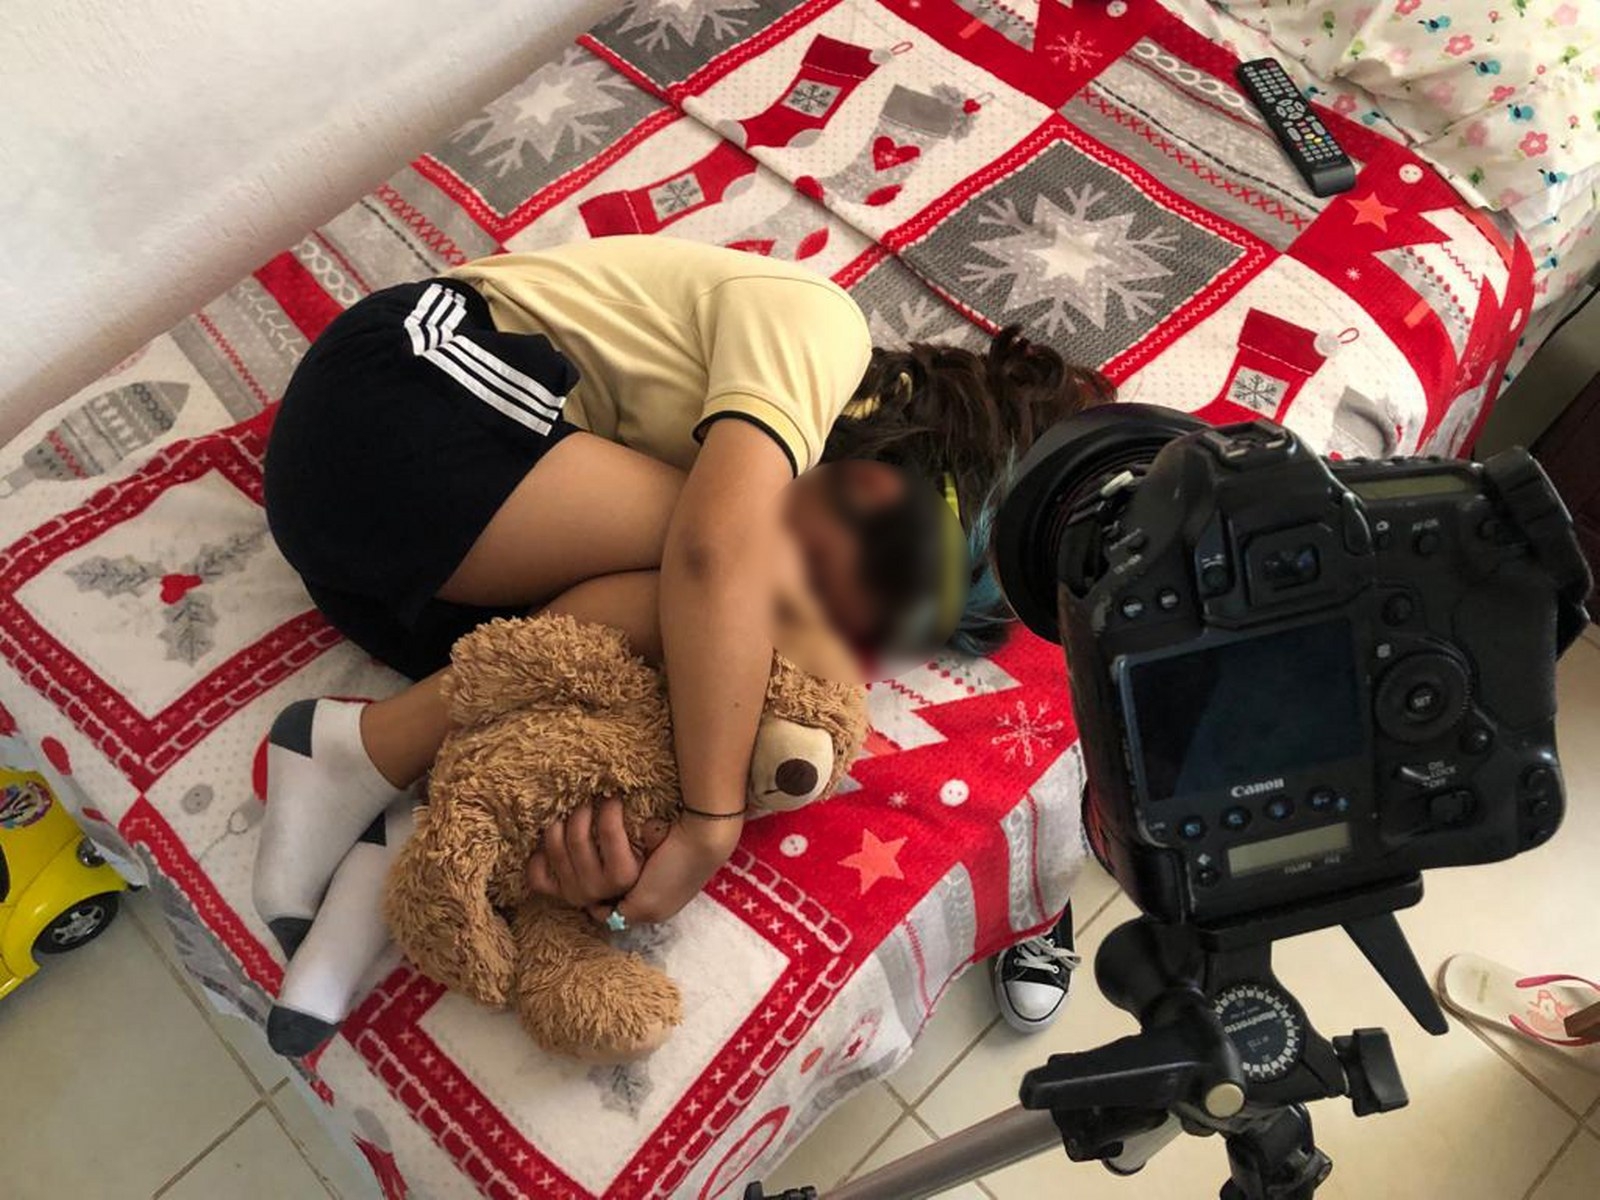 FGE Quintana Roo minimiza caso de pornografía infantil en Chetumal, acusan